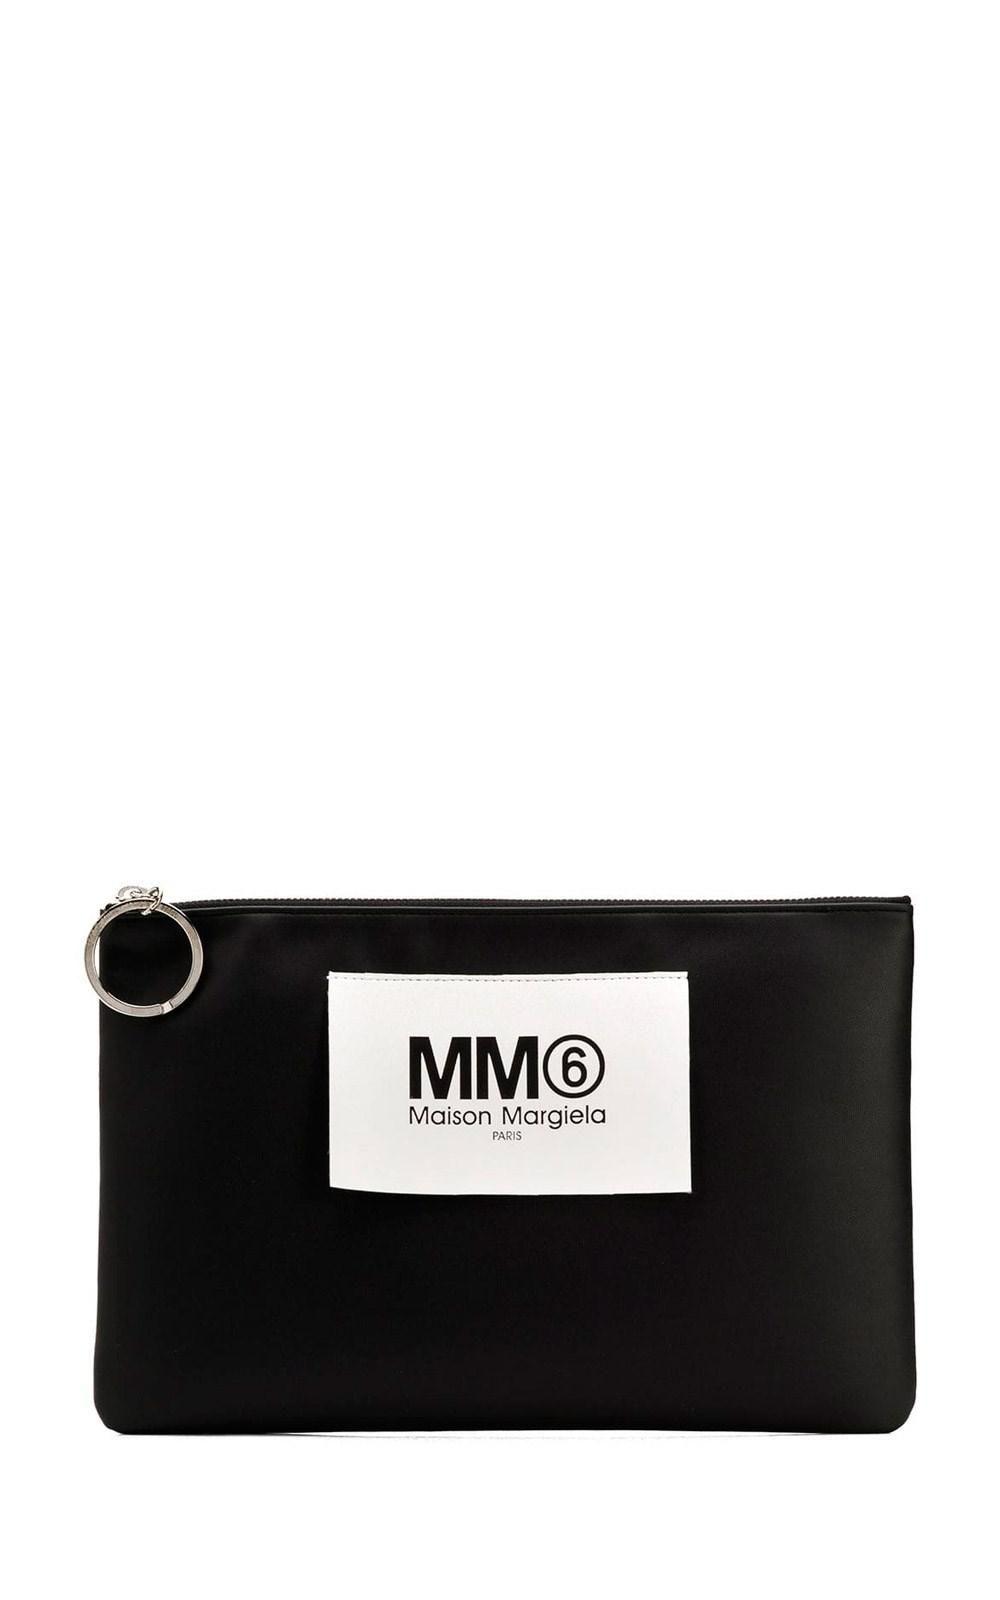 MM6 Maison Martin Margiela Logo - Mm6 By Maison Martin Margiela Logo Leather Clutch in Black - Lyst